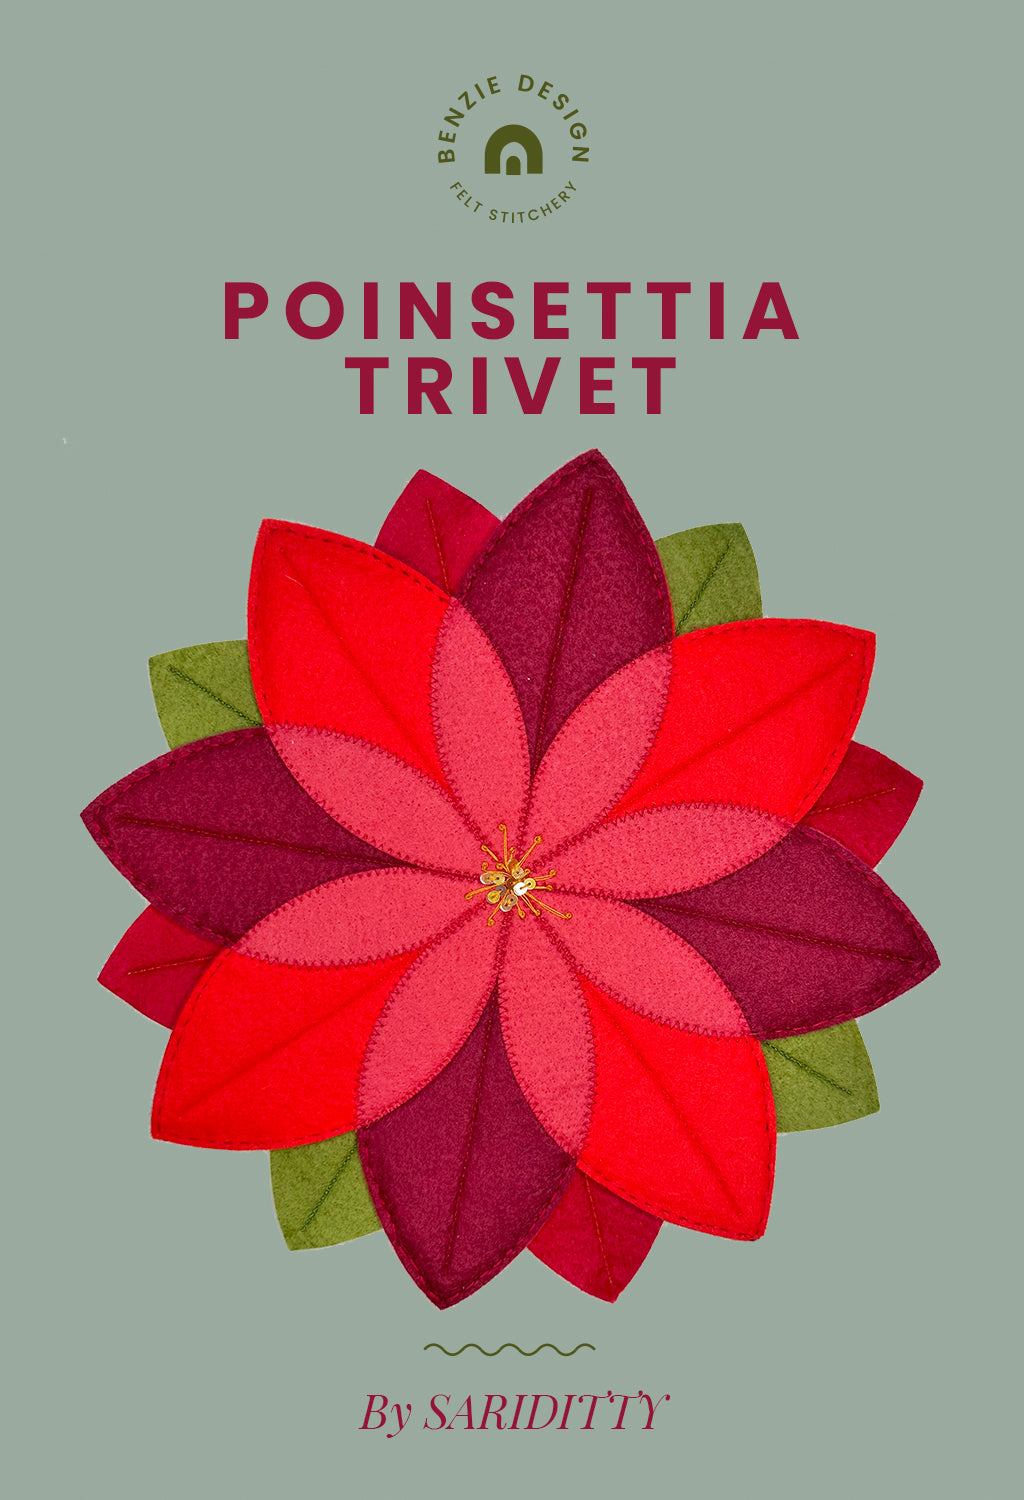 Poinsettia Trivet tutorial